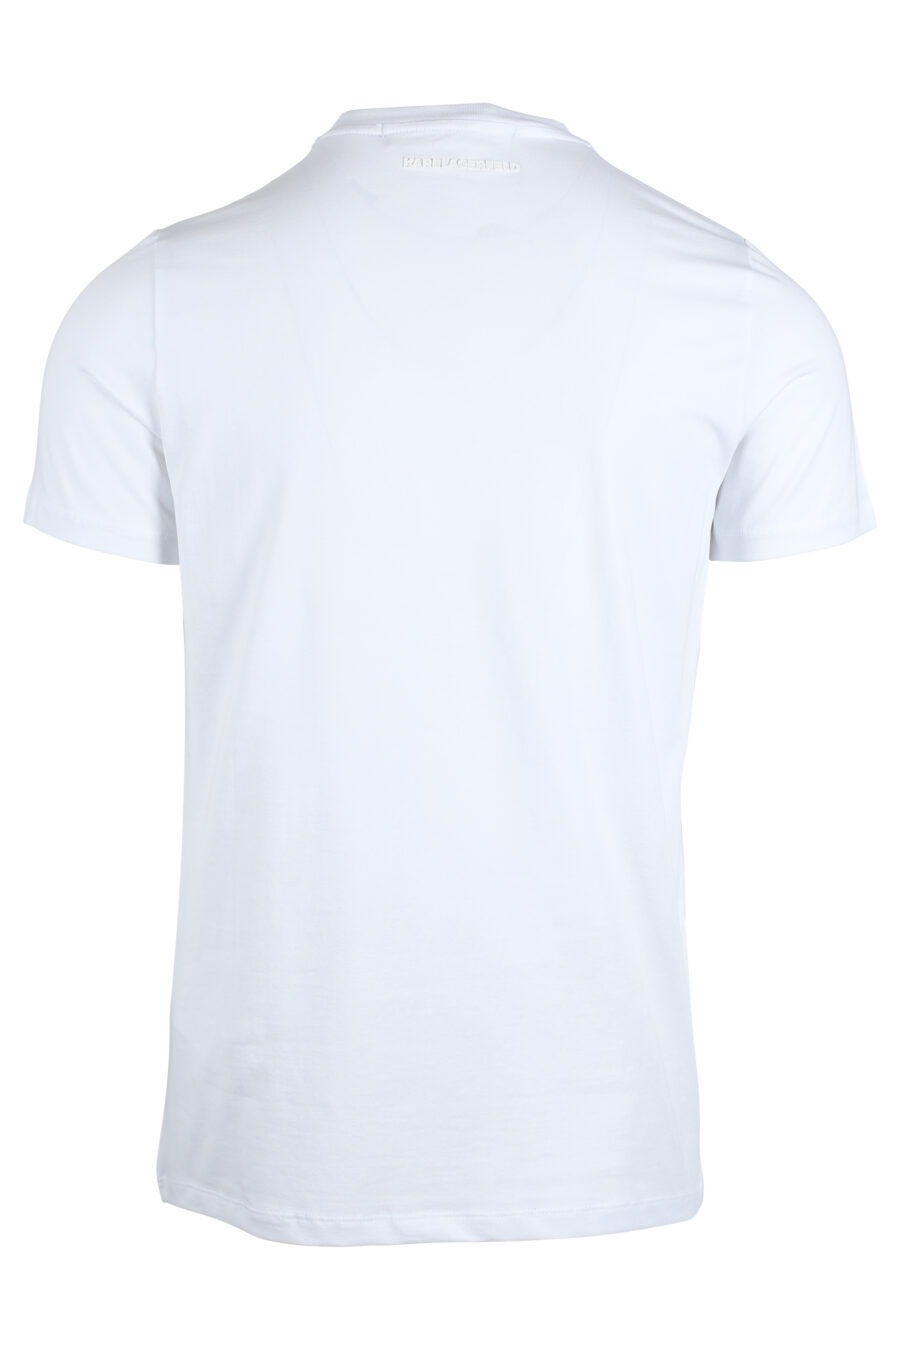 Camiseta blanca con maxilogo "karl" en silueta naranja - IMG 4756